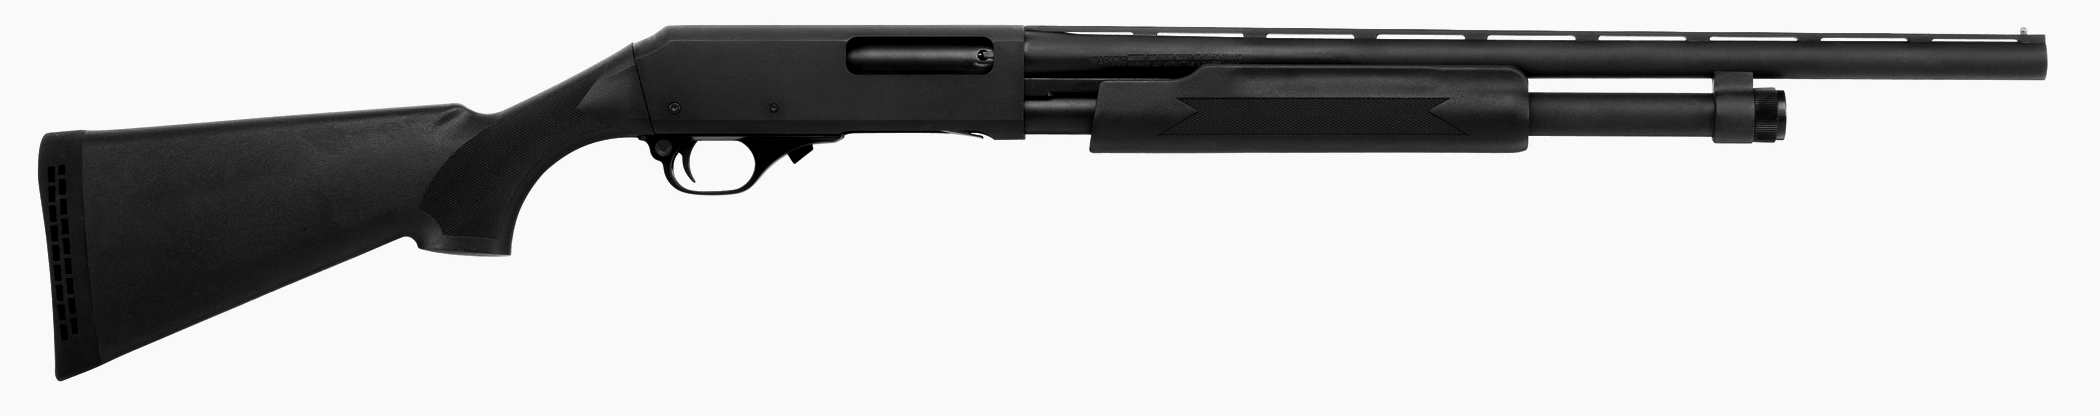 Pardner Pump Compact Synthetic Shotgun